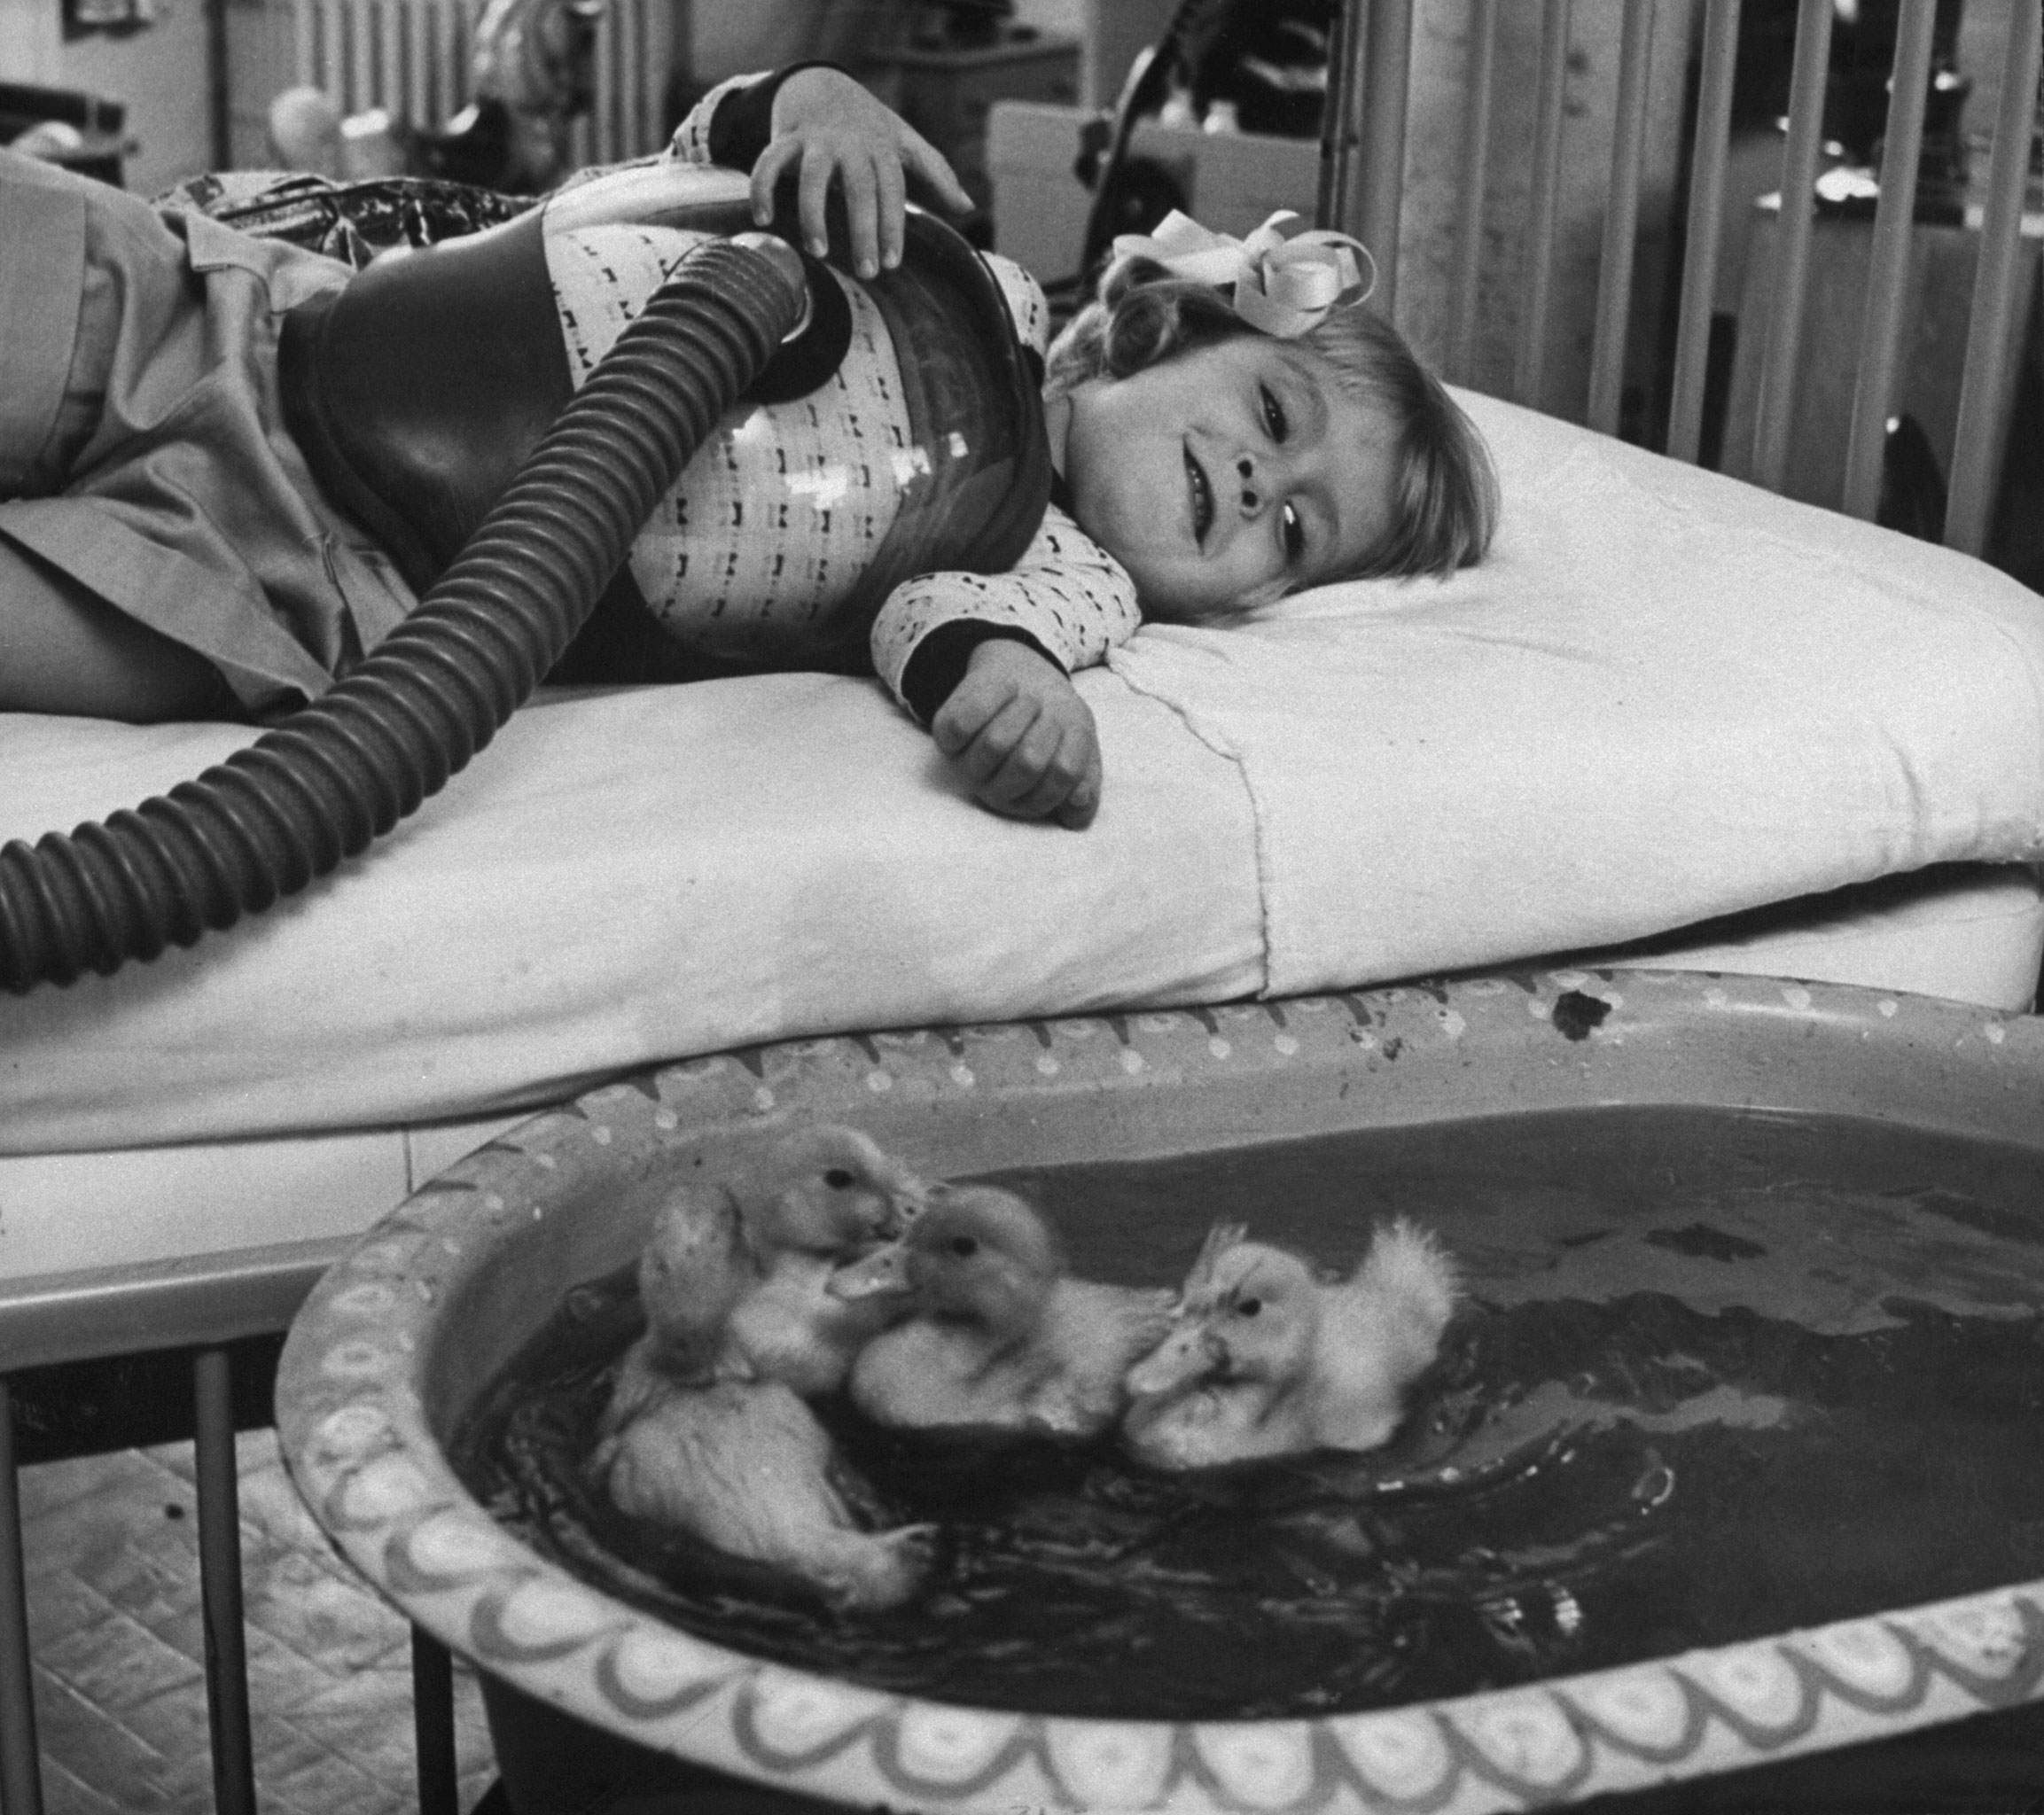 Scene at University of Michigan's hospital at Ann Arbor, 1956.